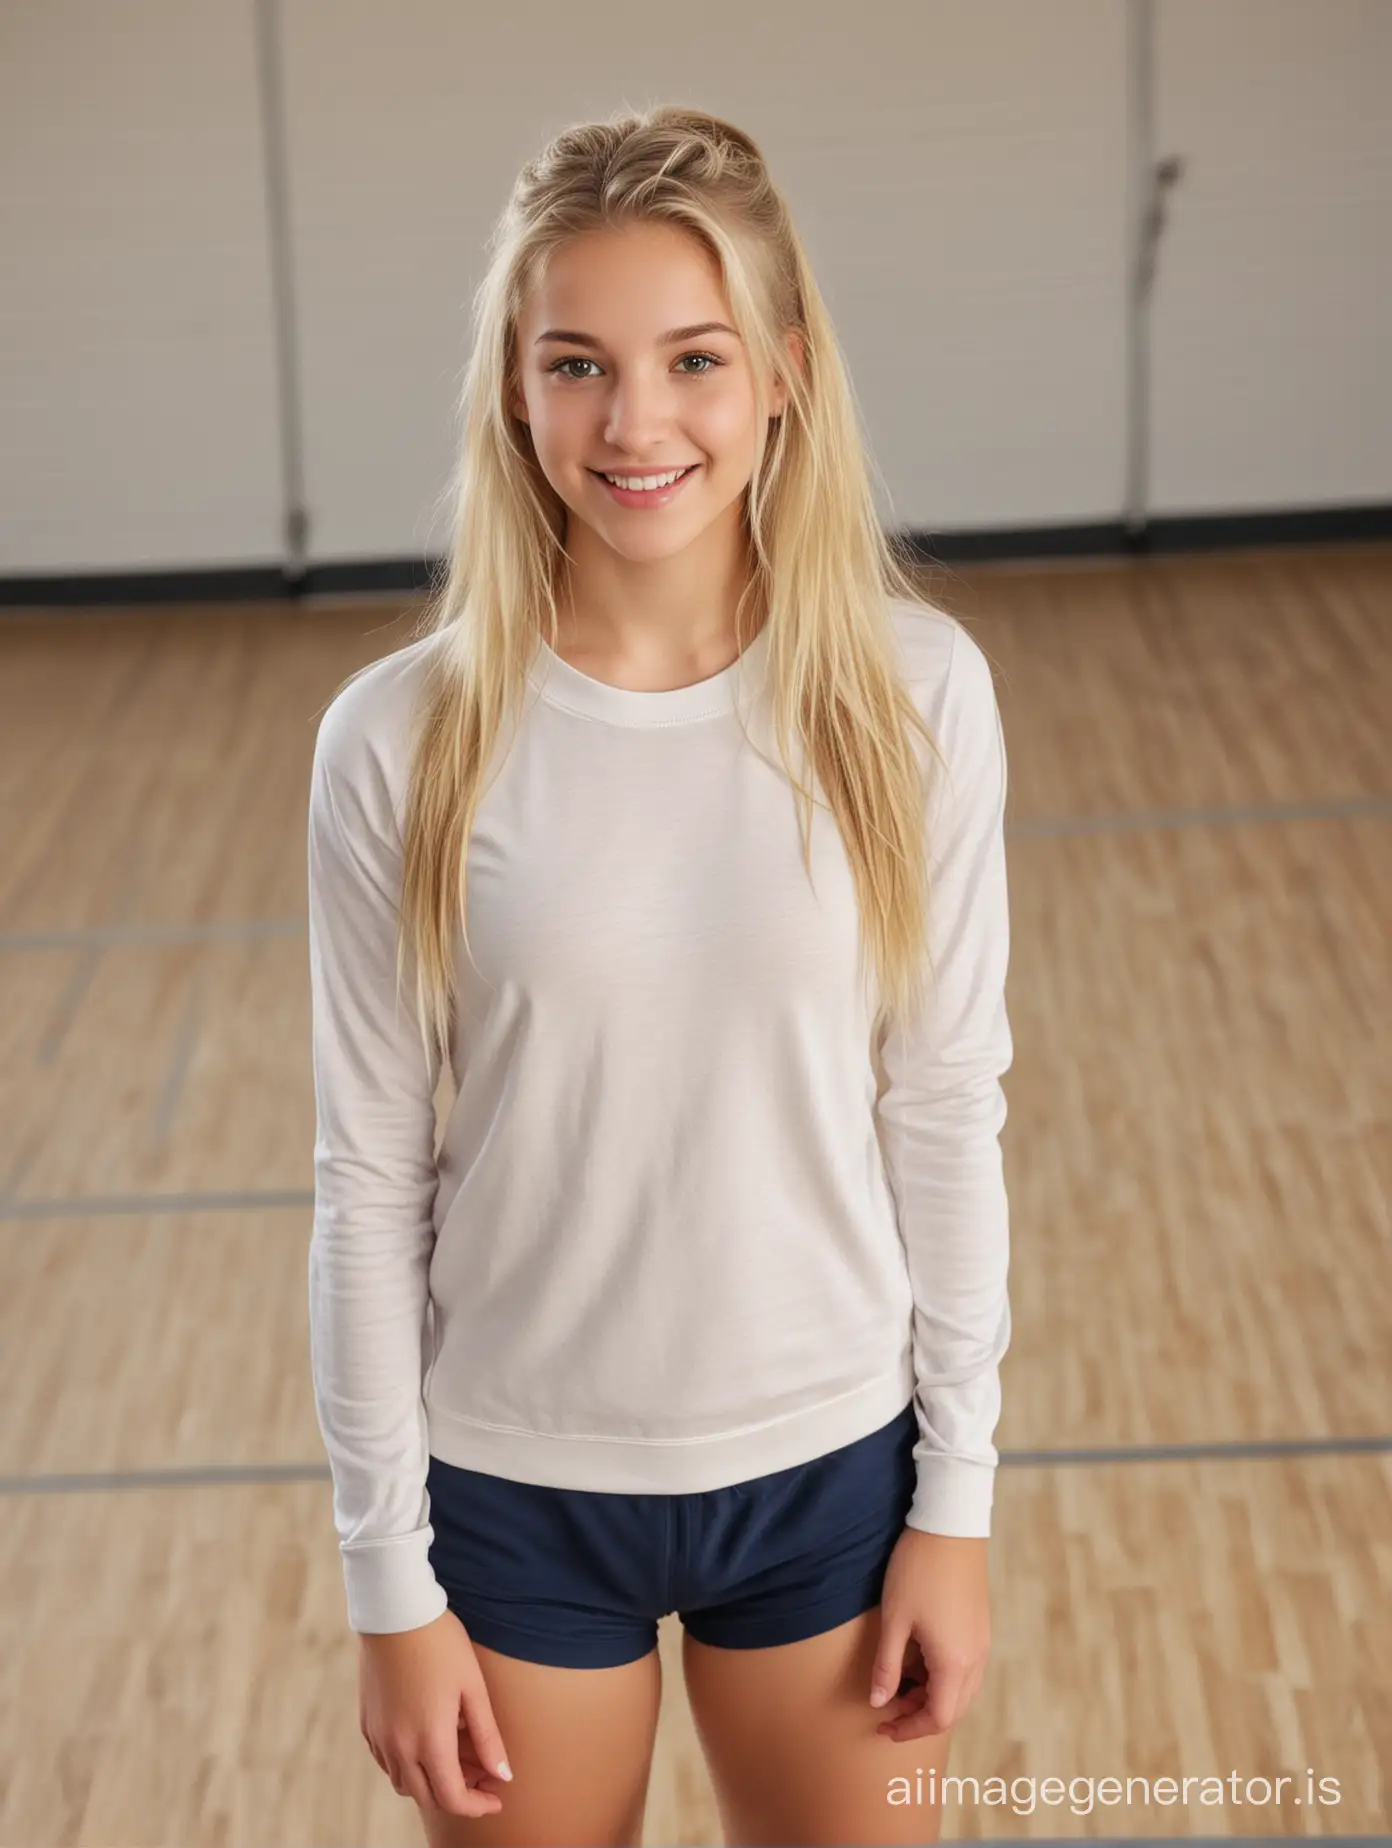 Cheerful-Blonde-Teenage-Girl-in-School-Gym-Class